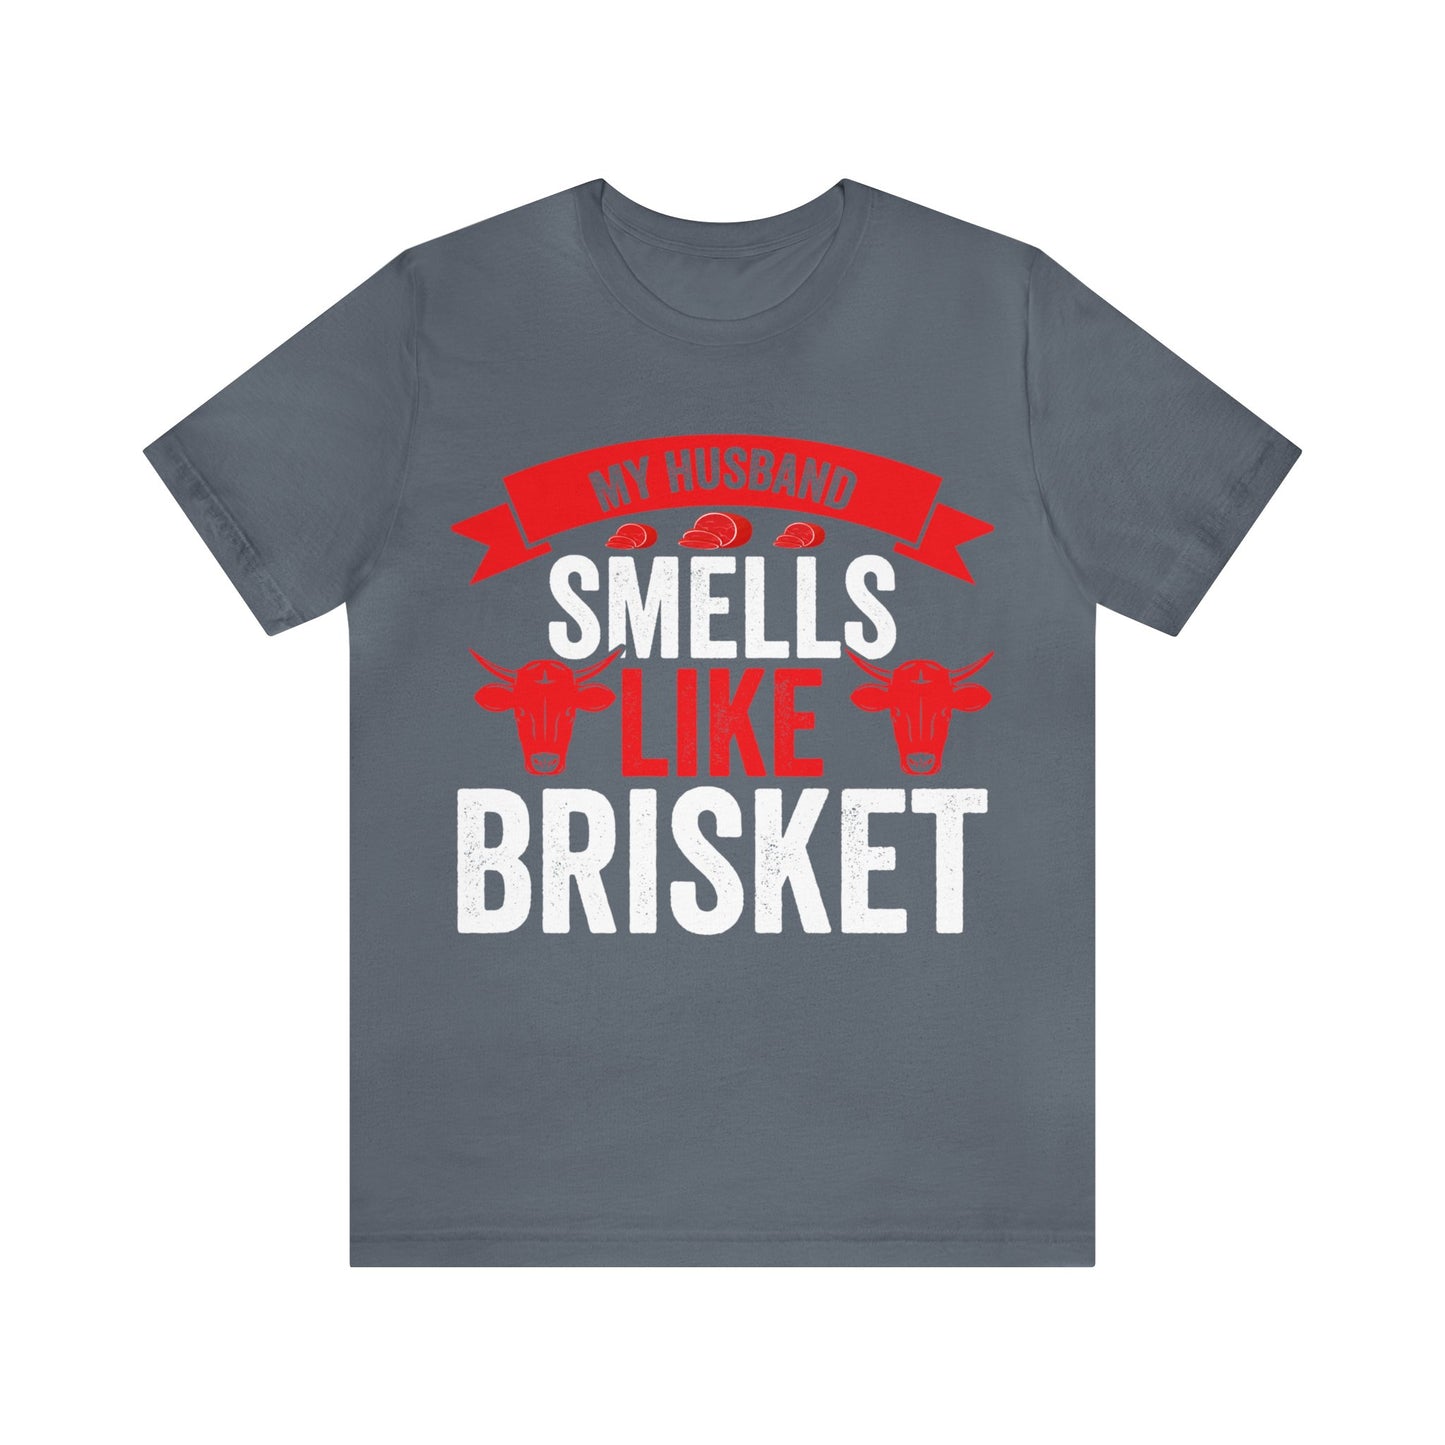 My husband smells like brisket T-Shirt